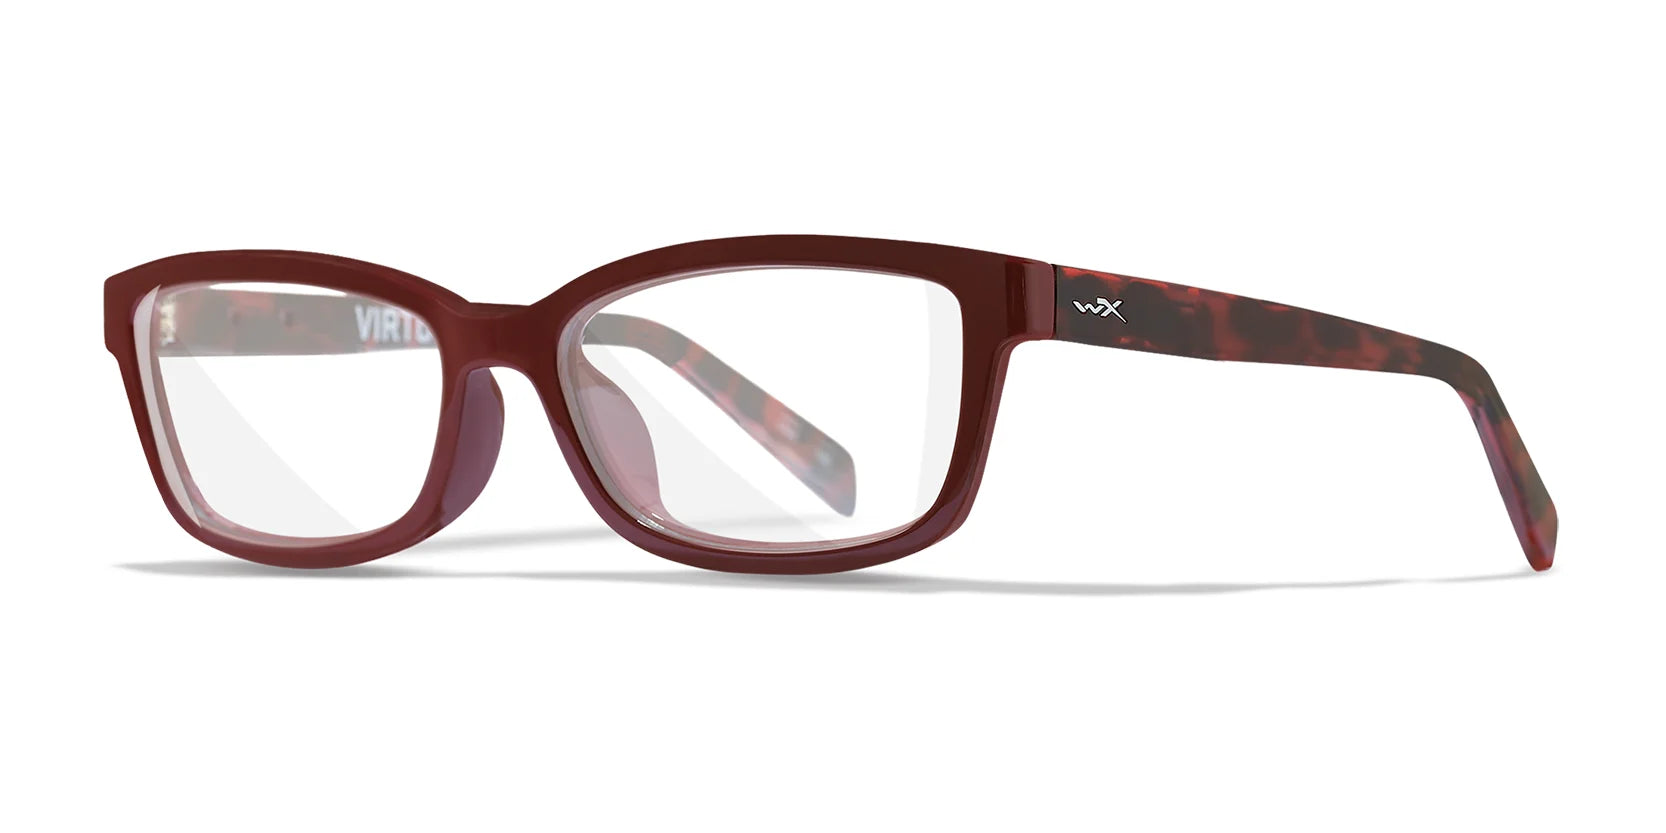 Wiley X VIRTUE Eyeglasses Gloss Ruby / Clear